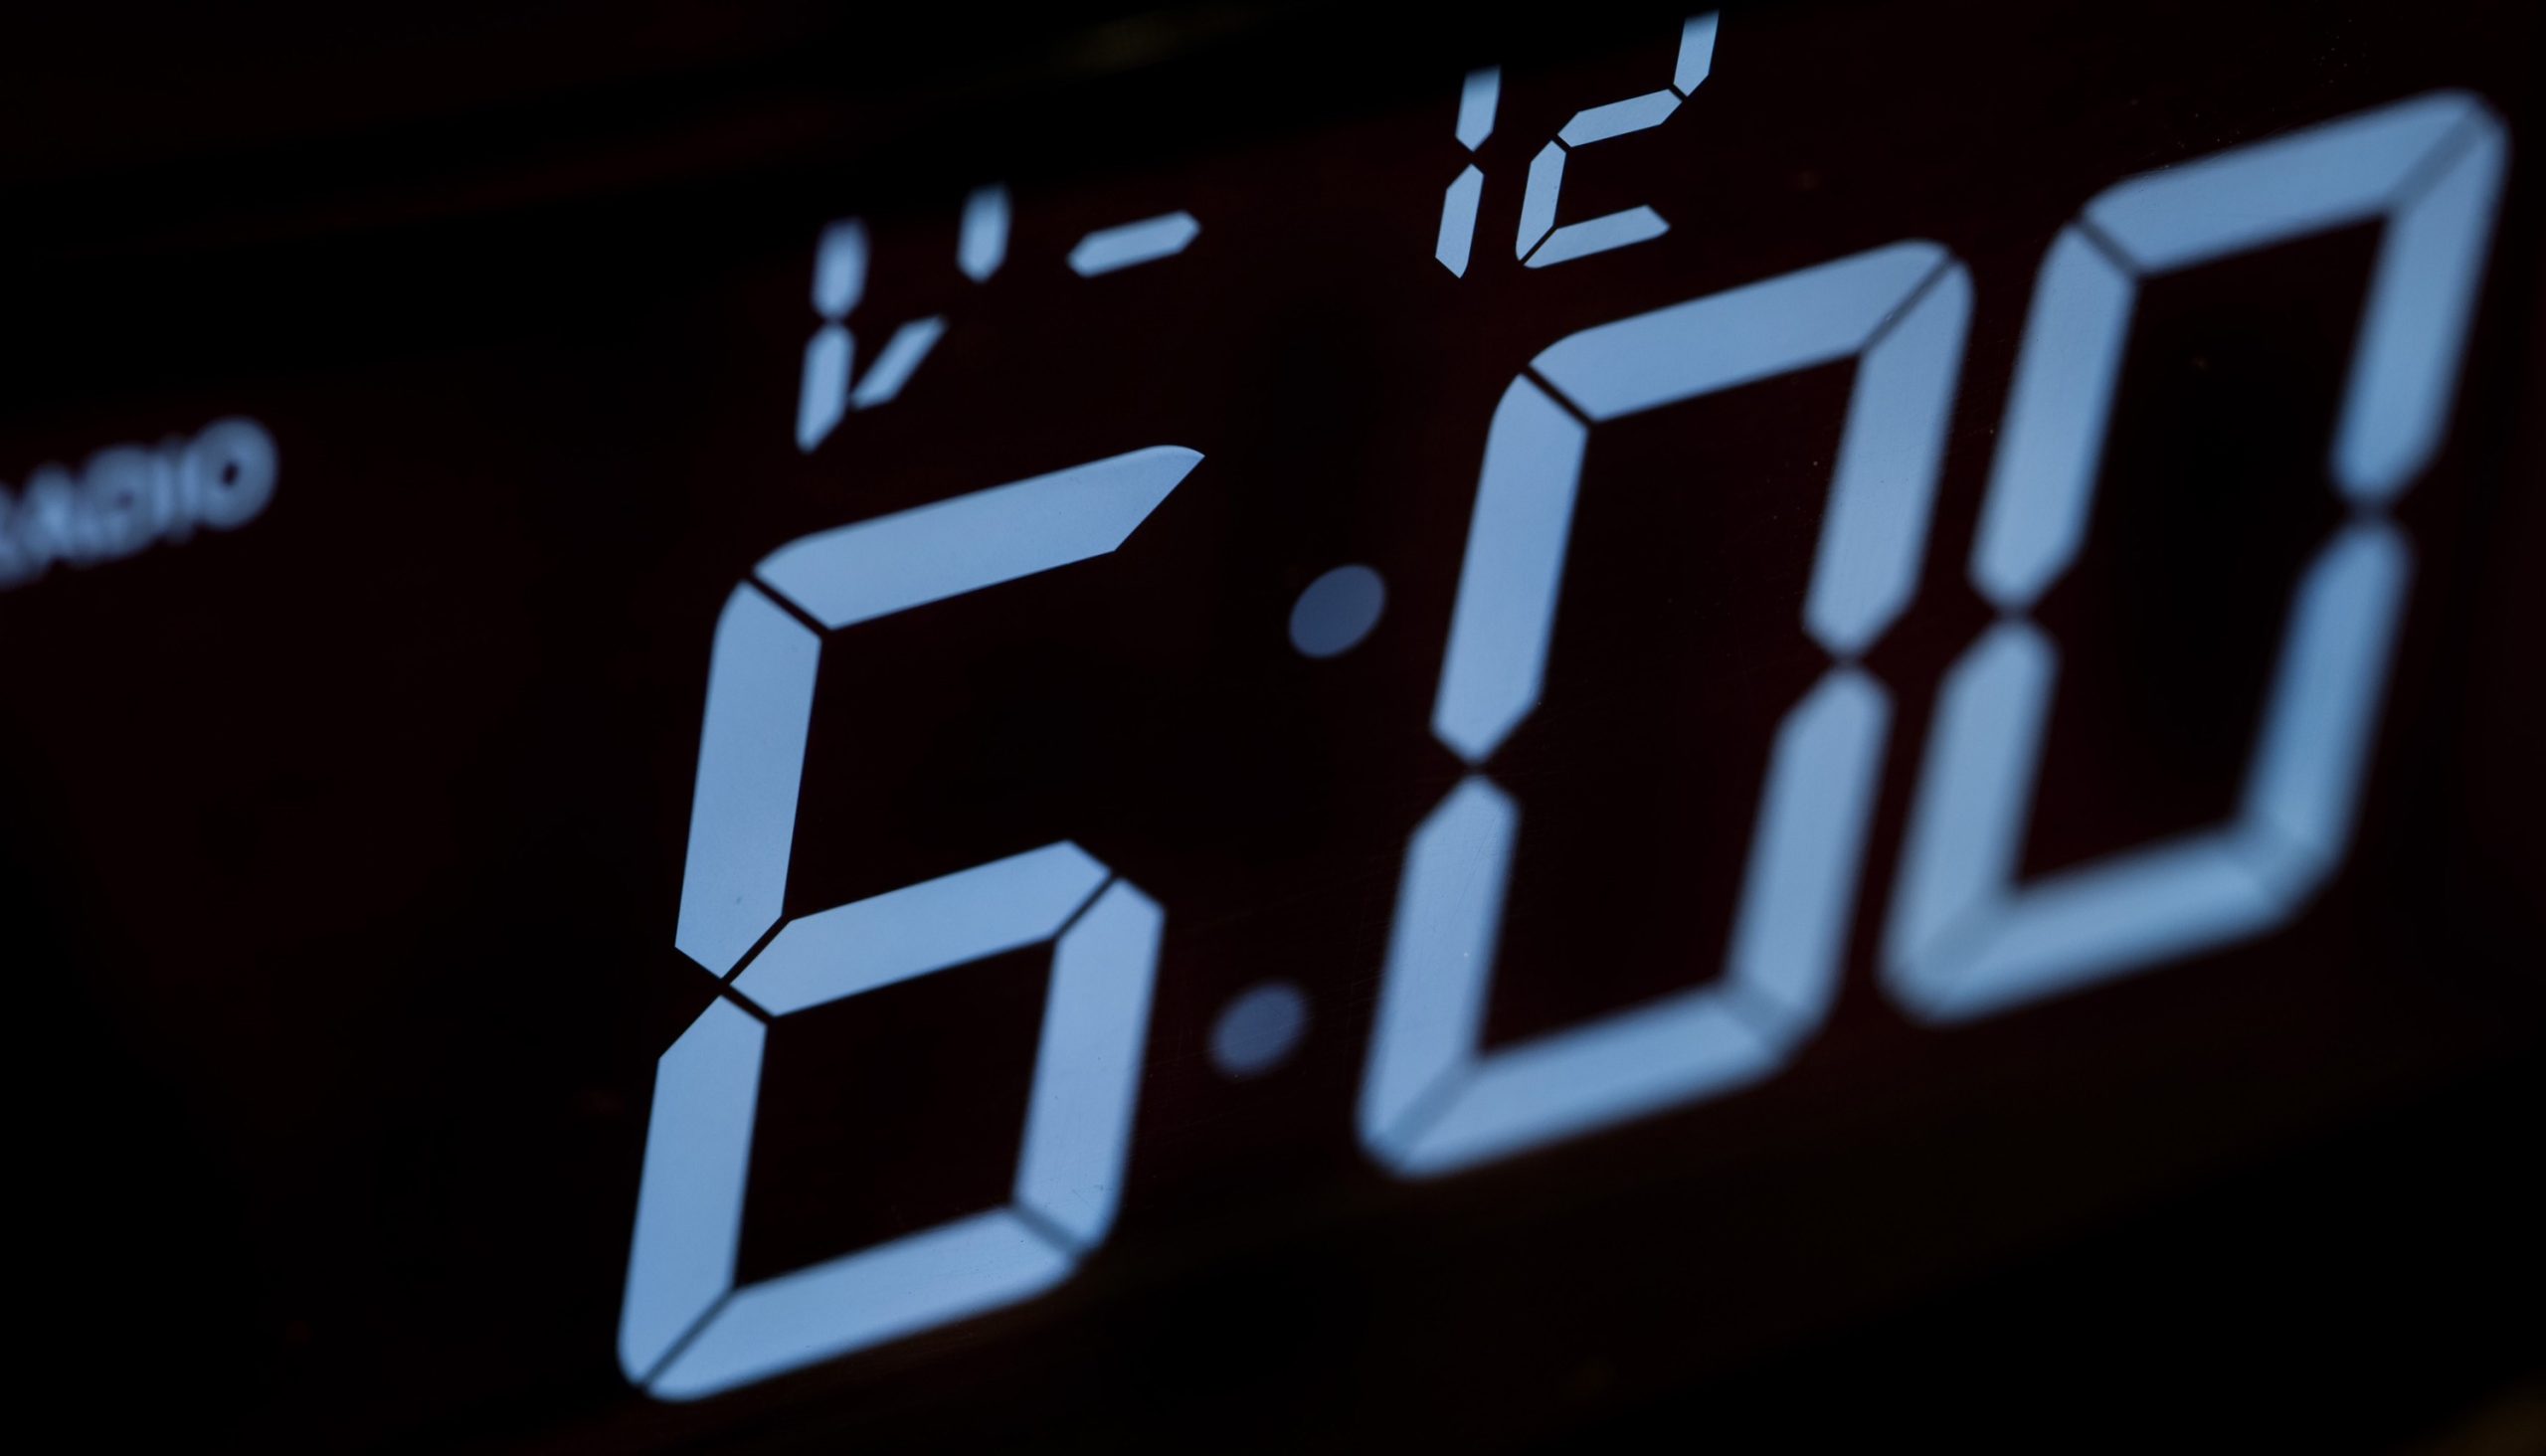 Digital alarm clock displaying time of 6 o'clock.